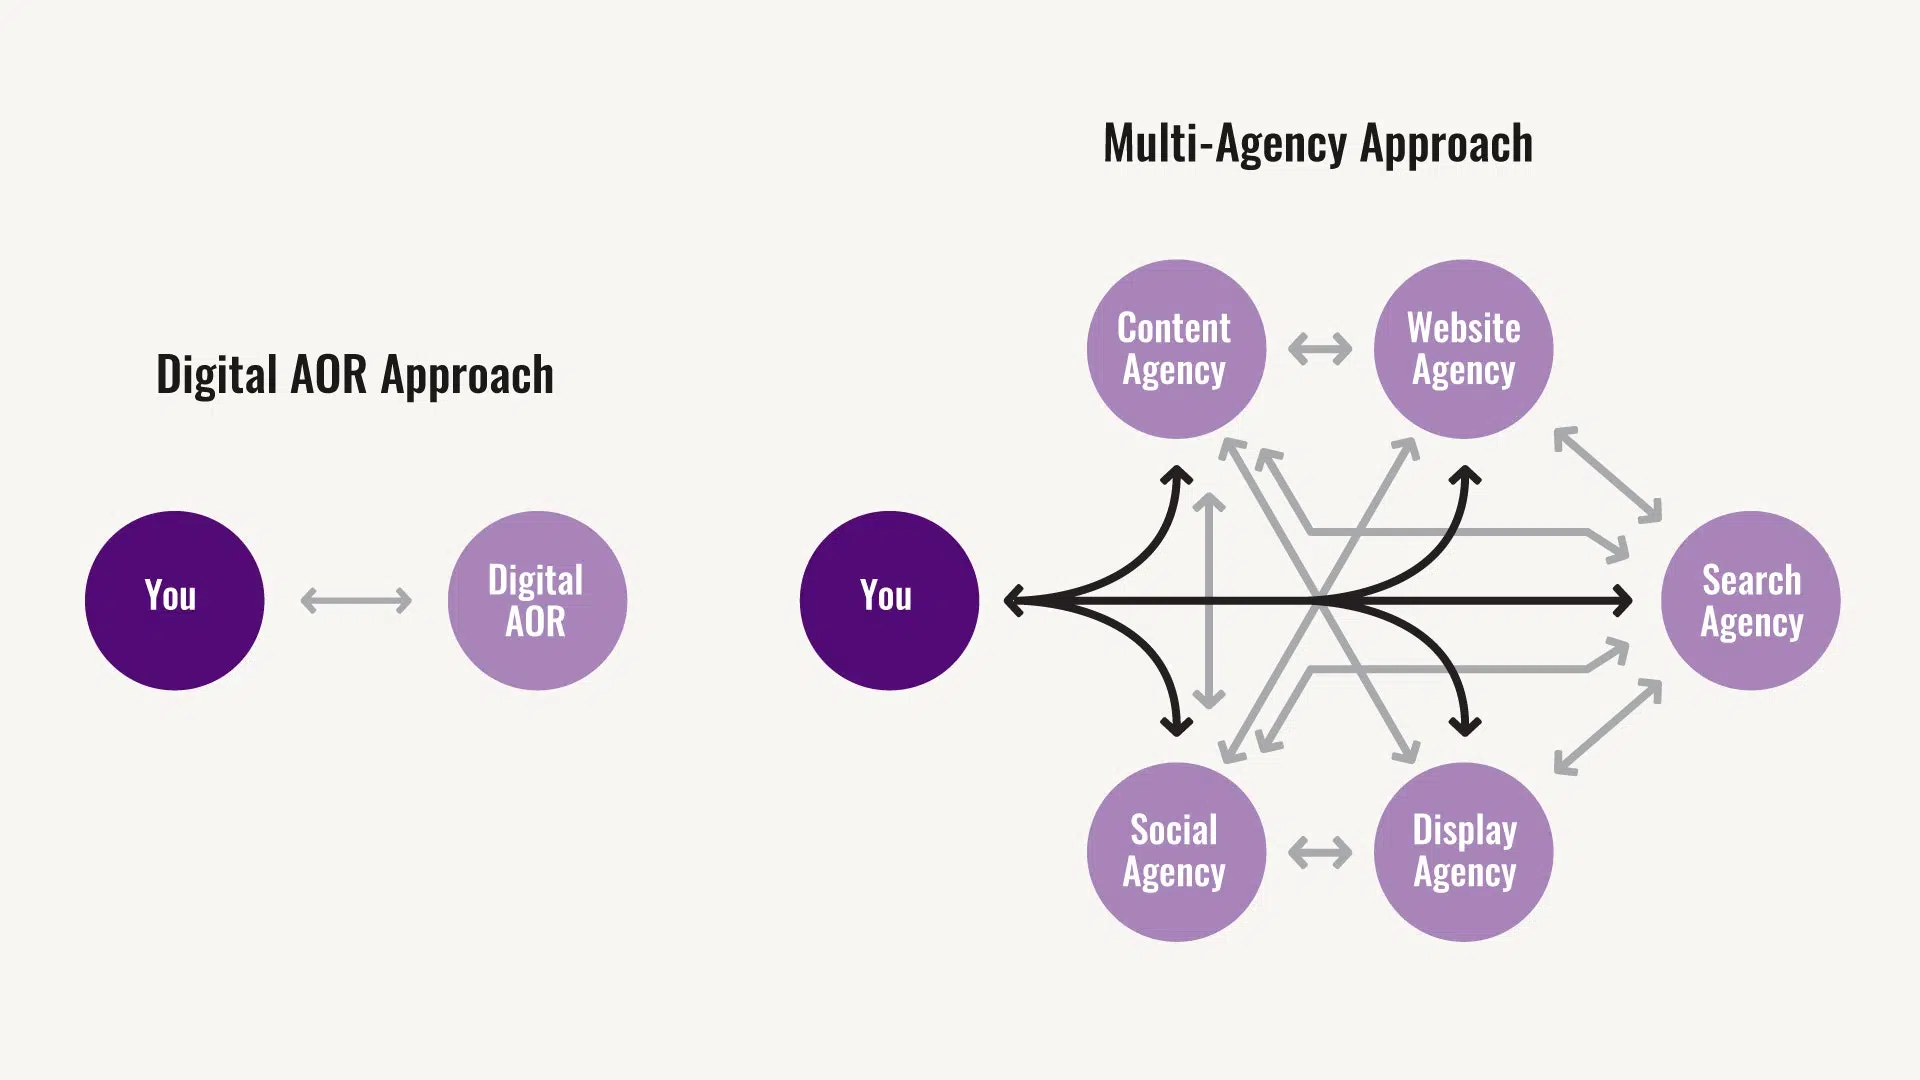 The Matrix Agency Model